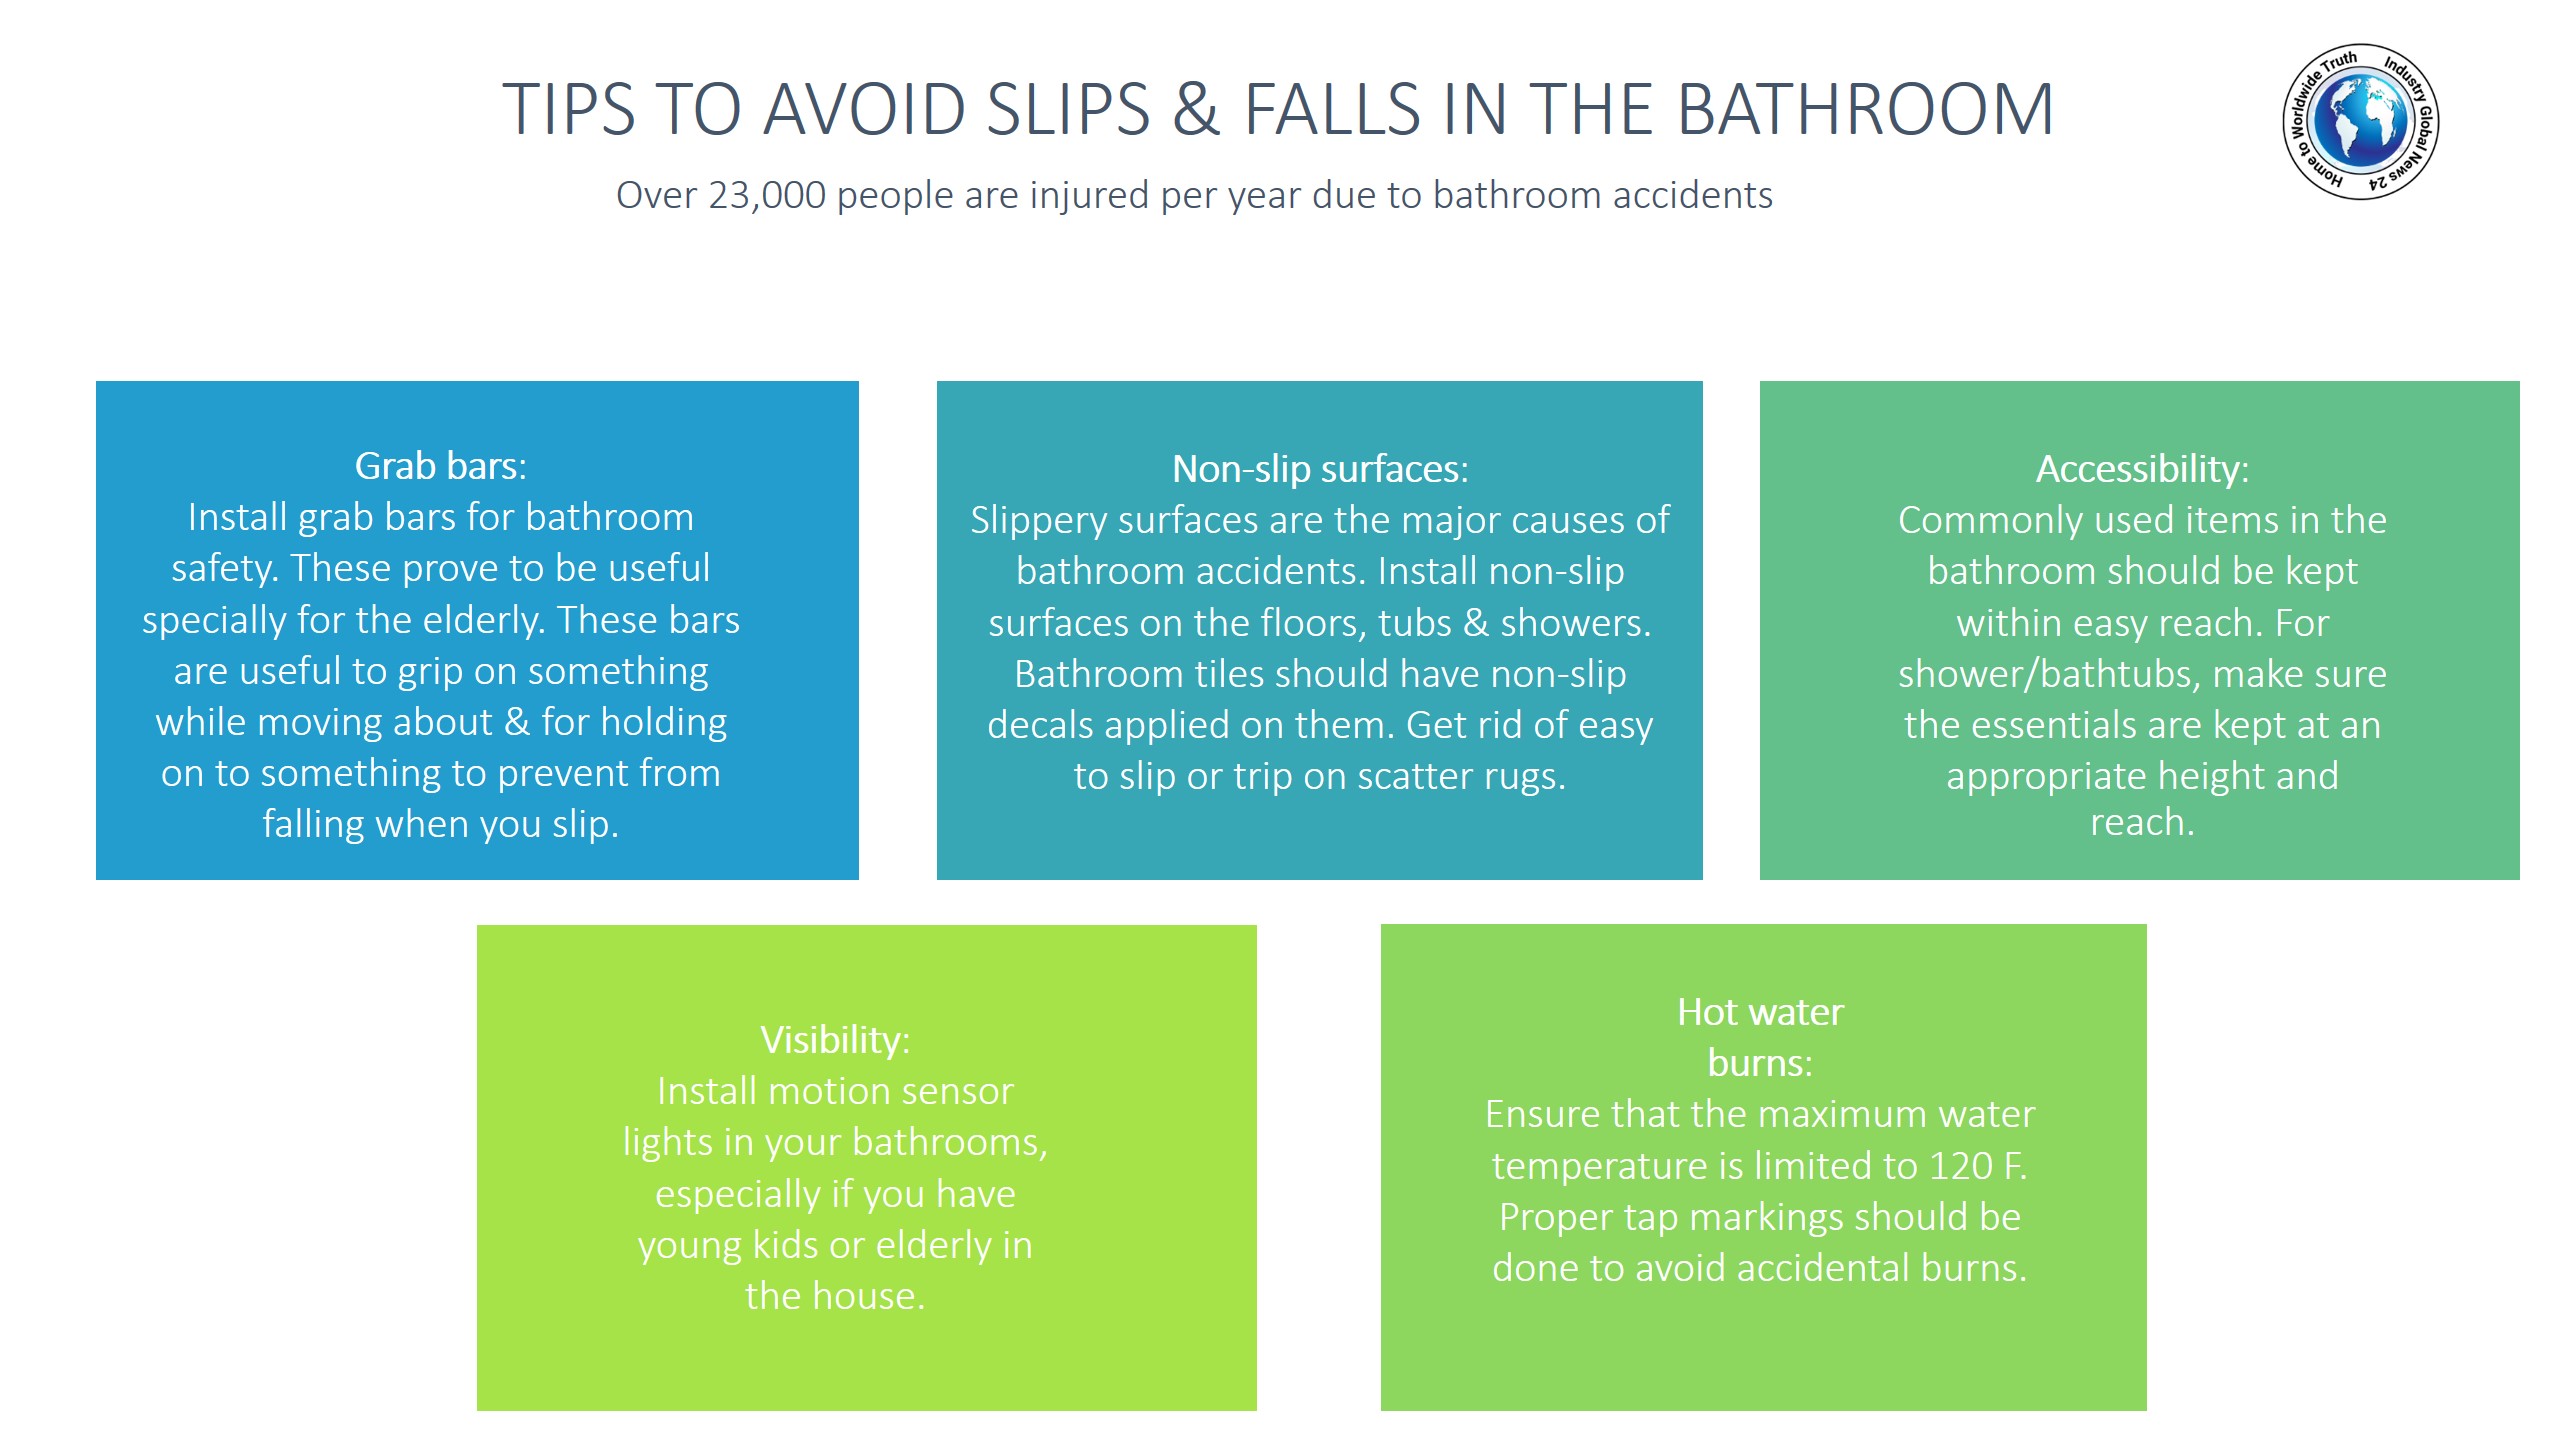 Tips to avoid slips & falls in the bathroom